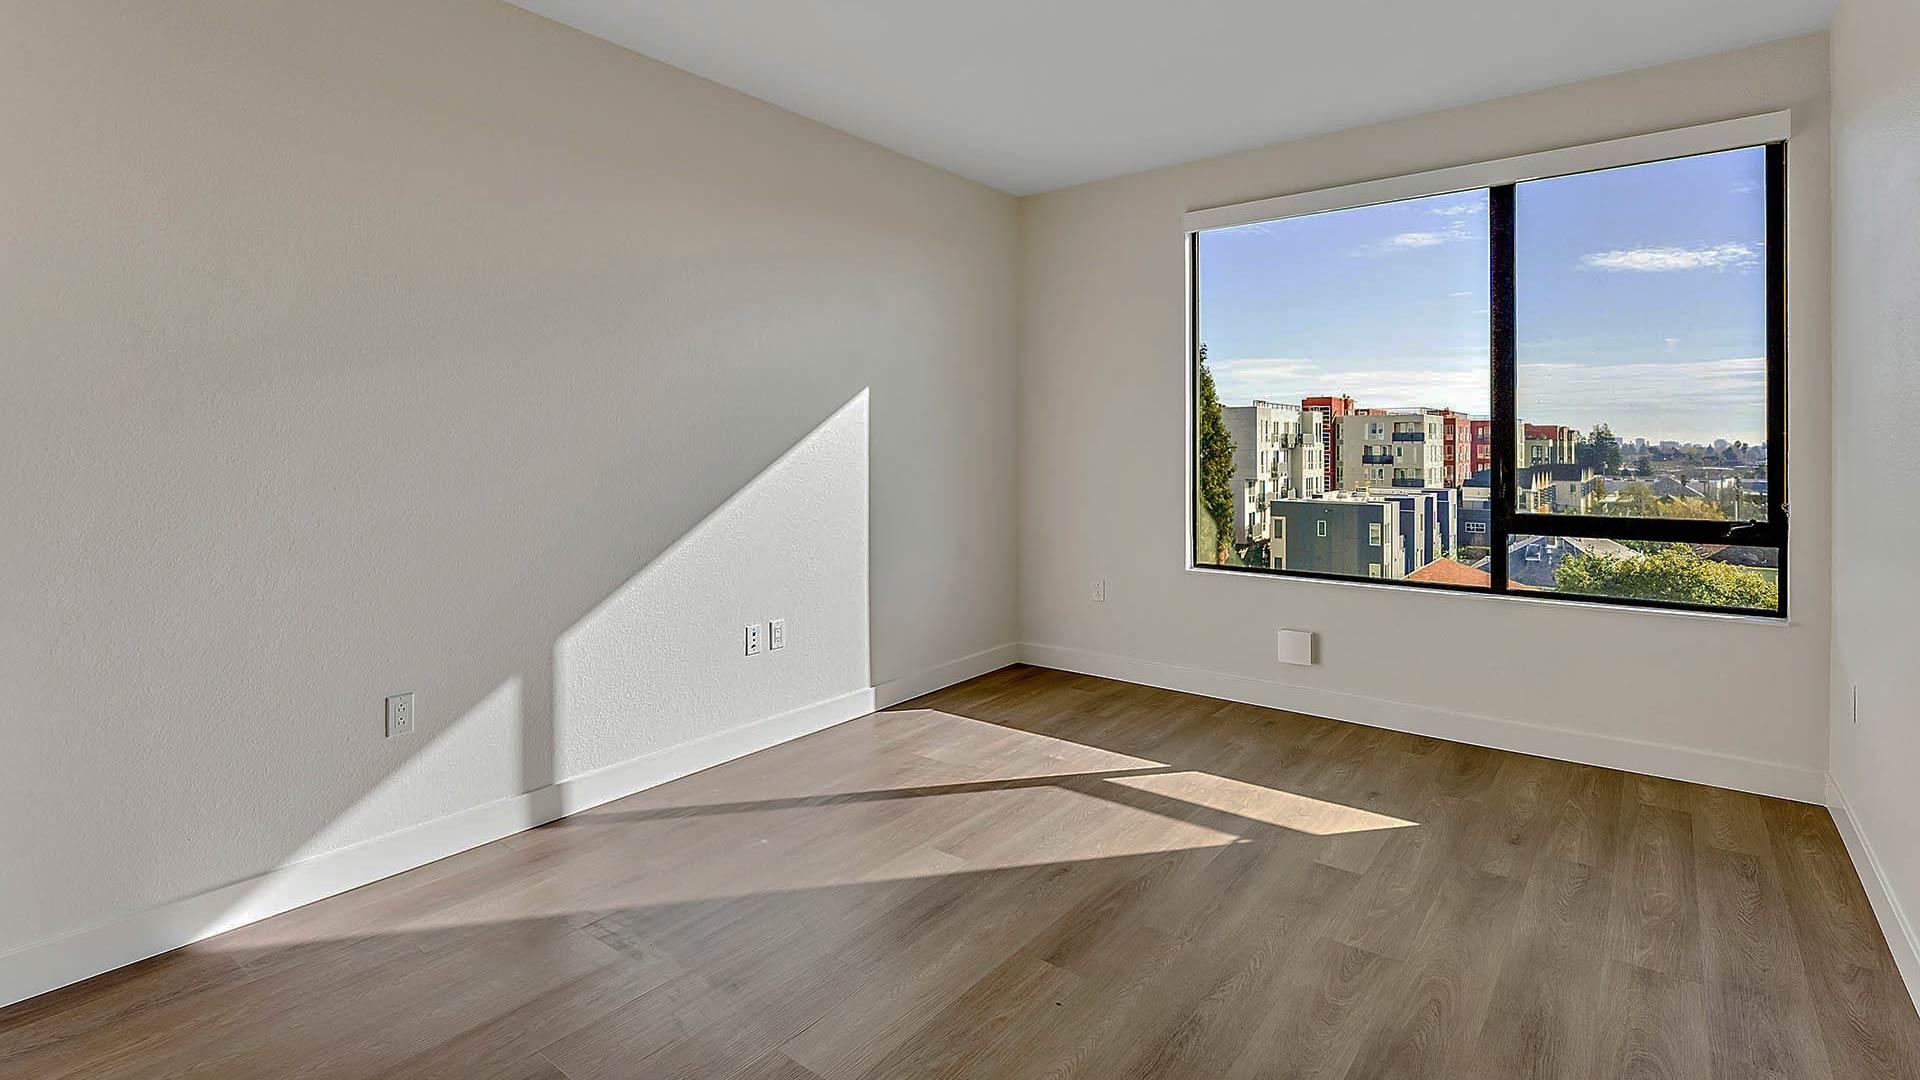 Blake apartments b4 floorplan window view 2